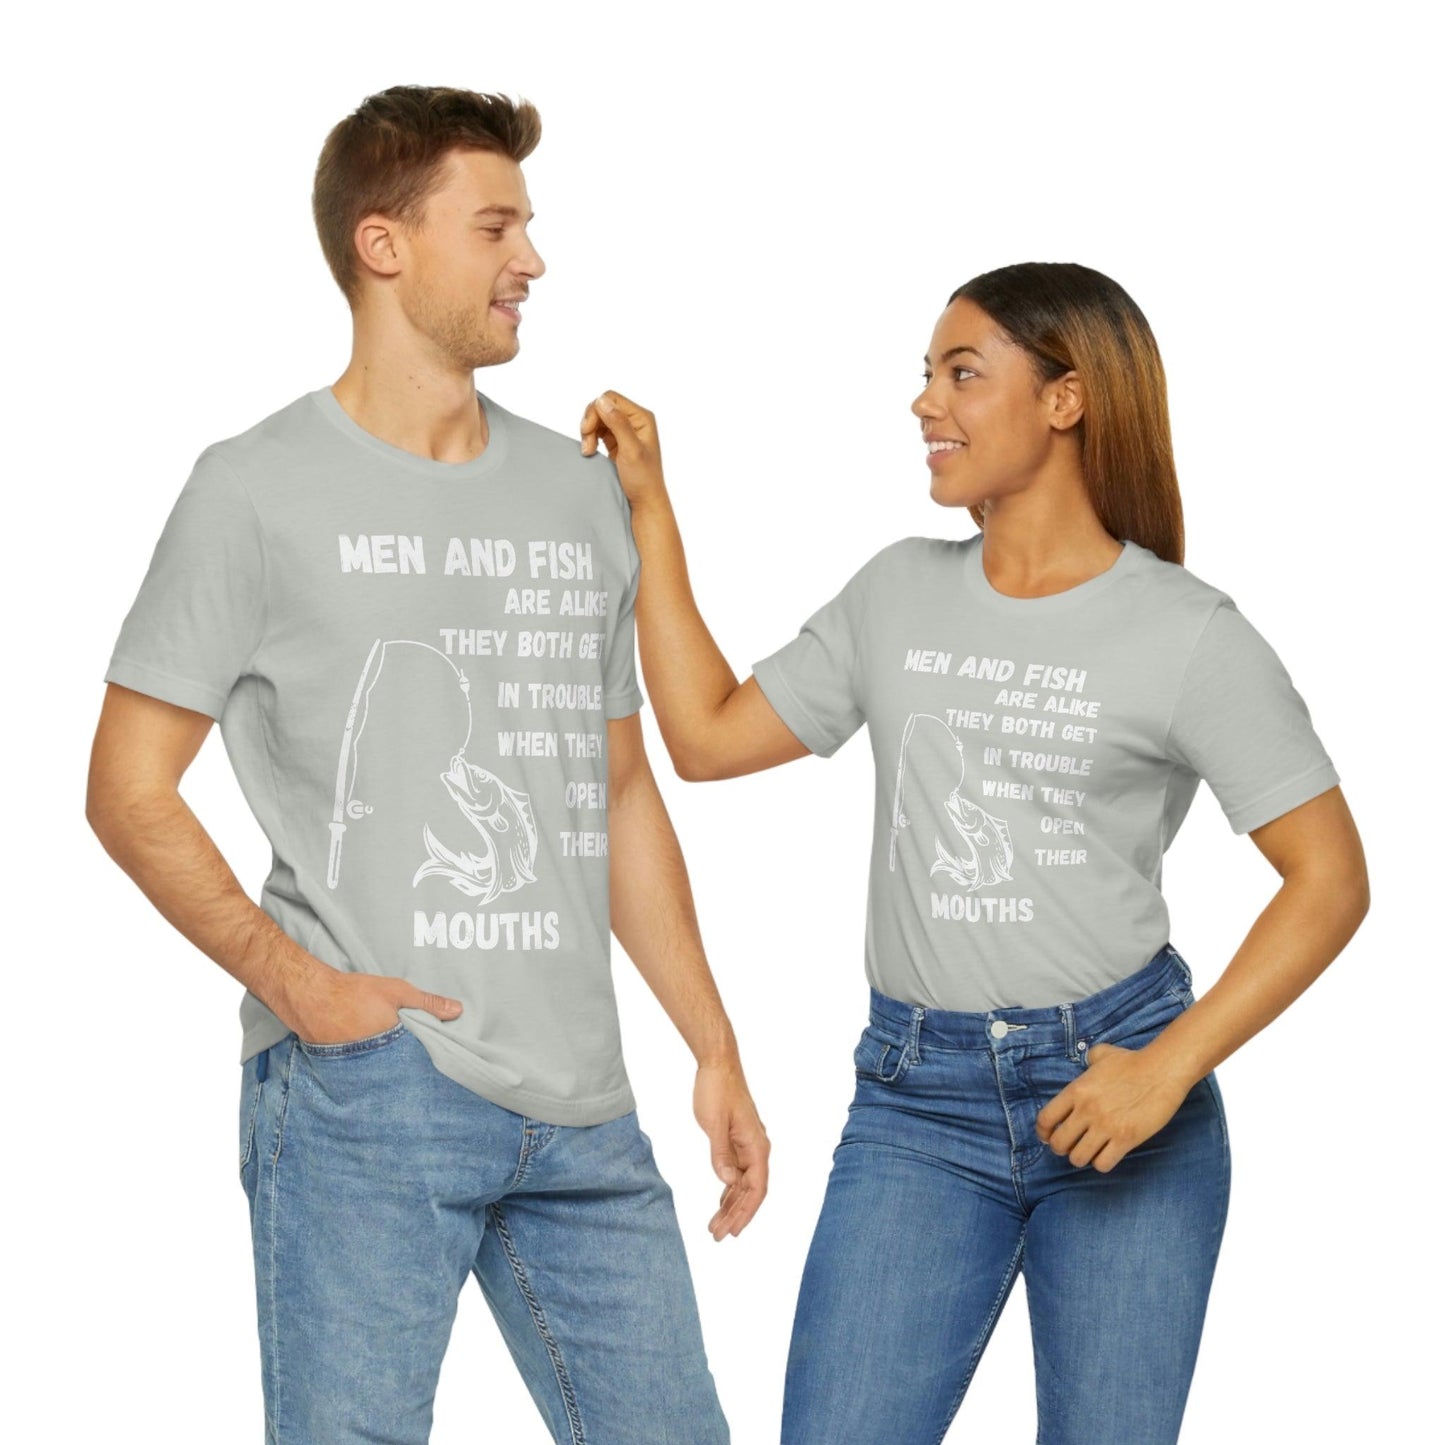 Men and Fish are Alike - Funny fishing shirt